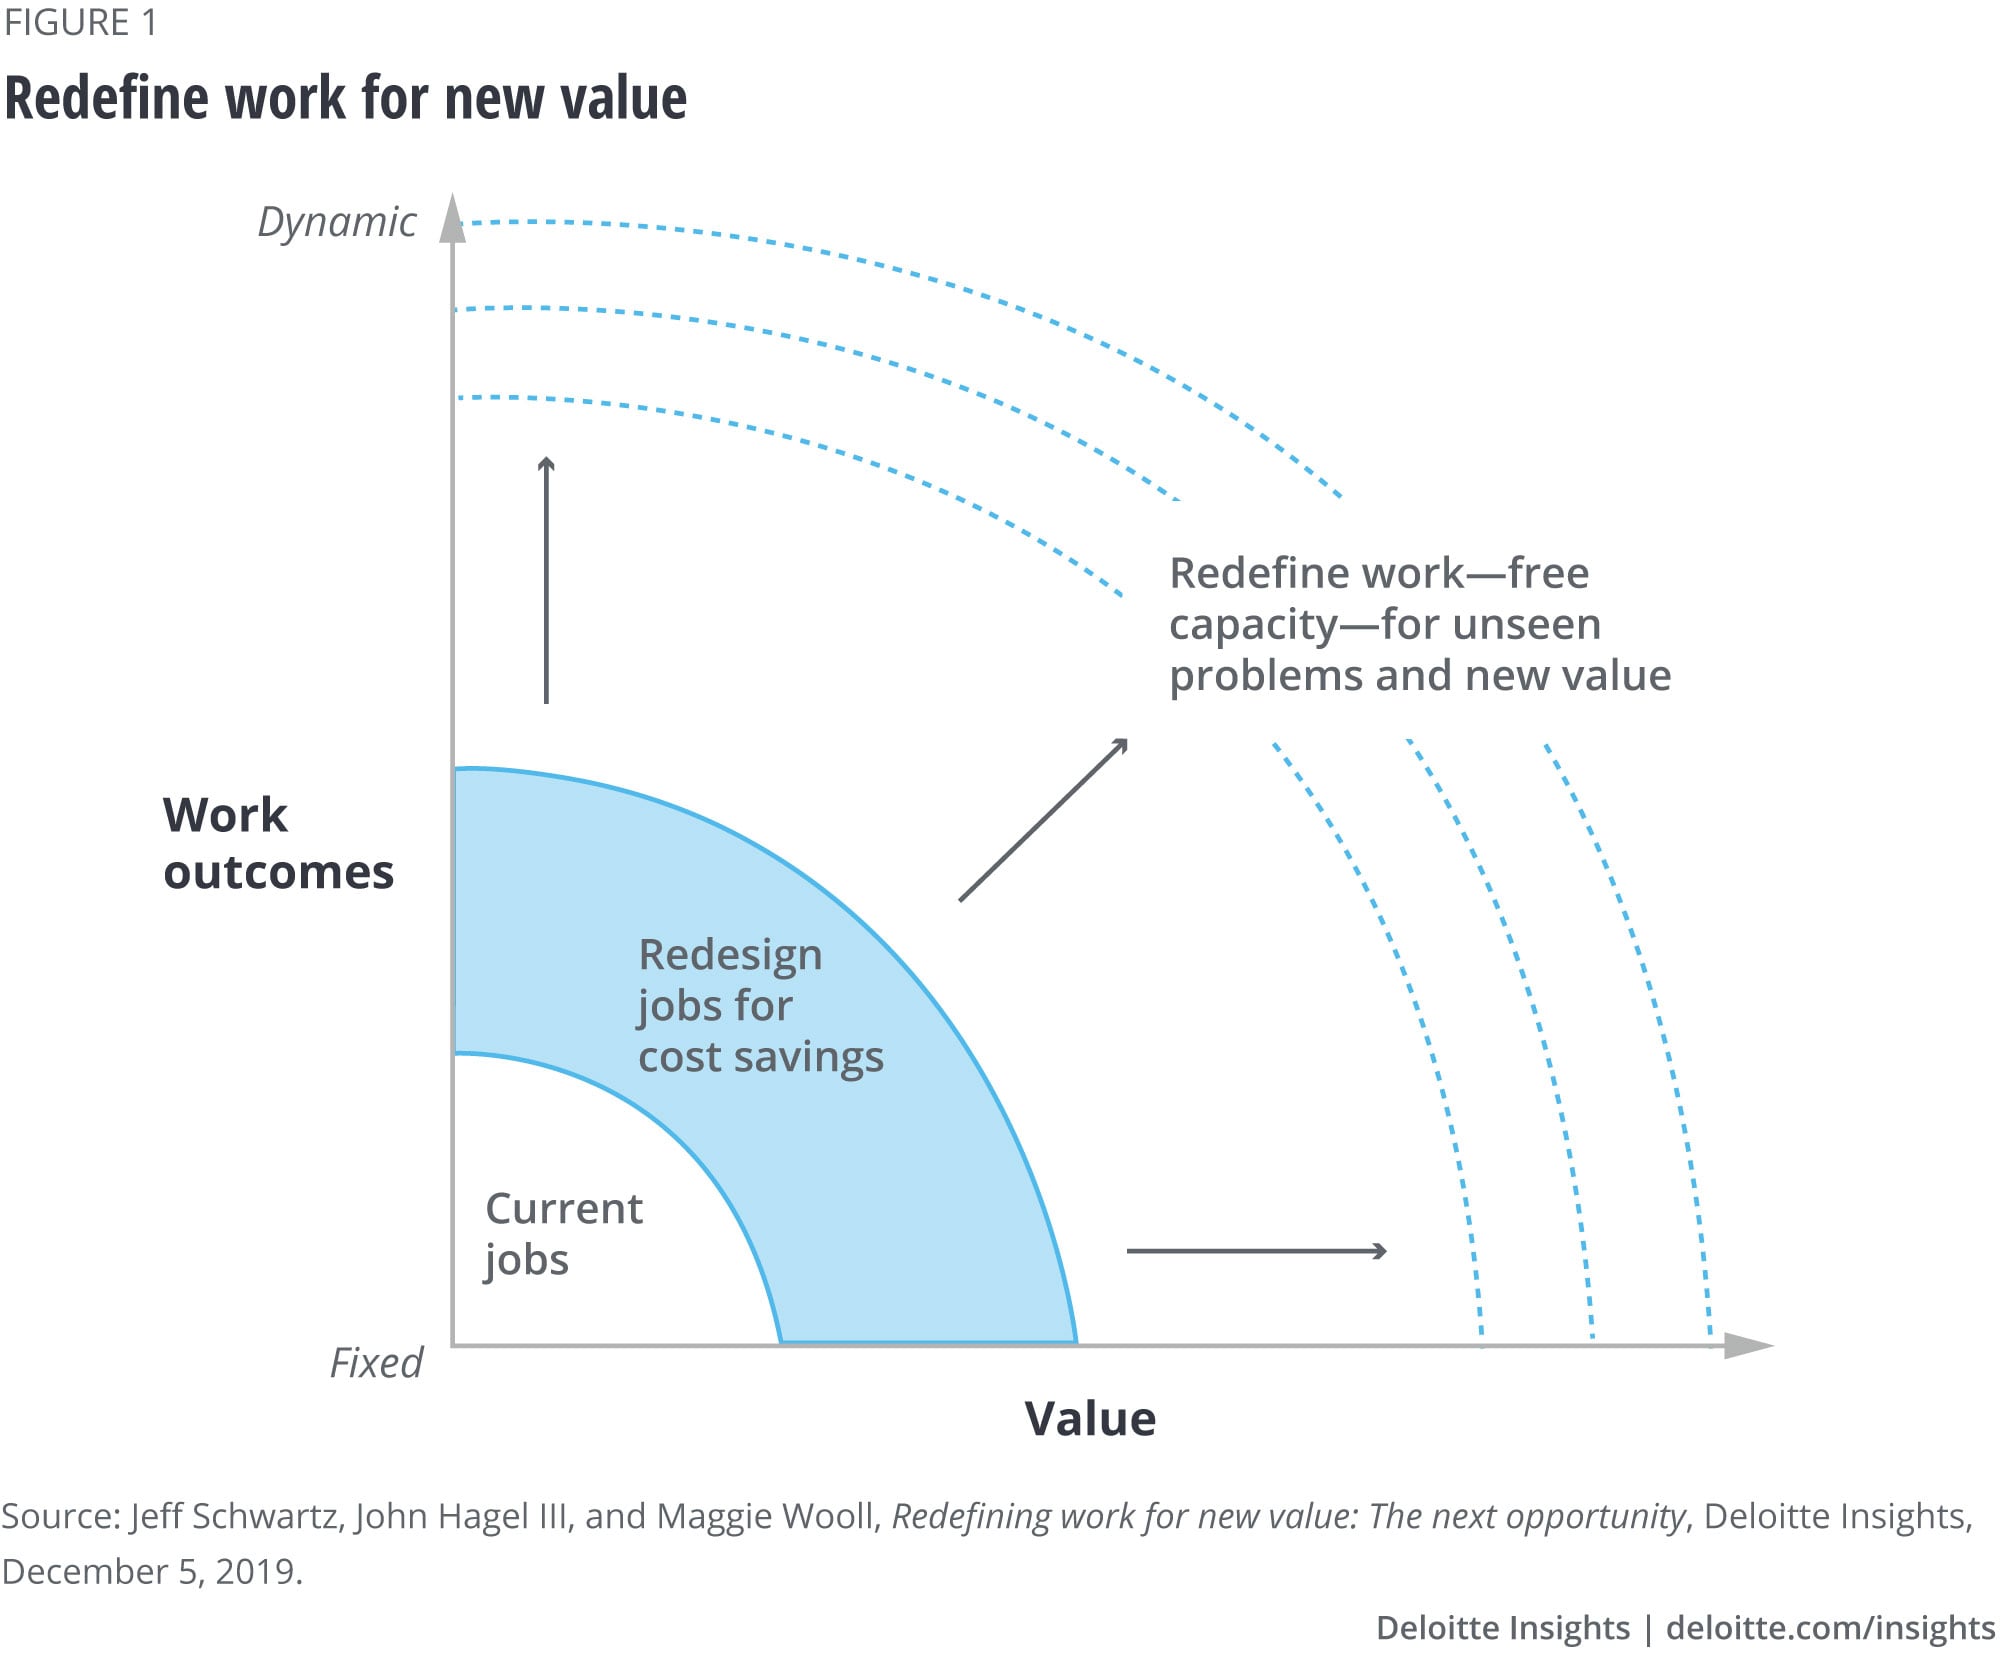 Redefine work for new value